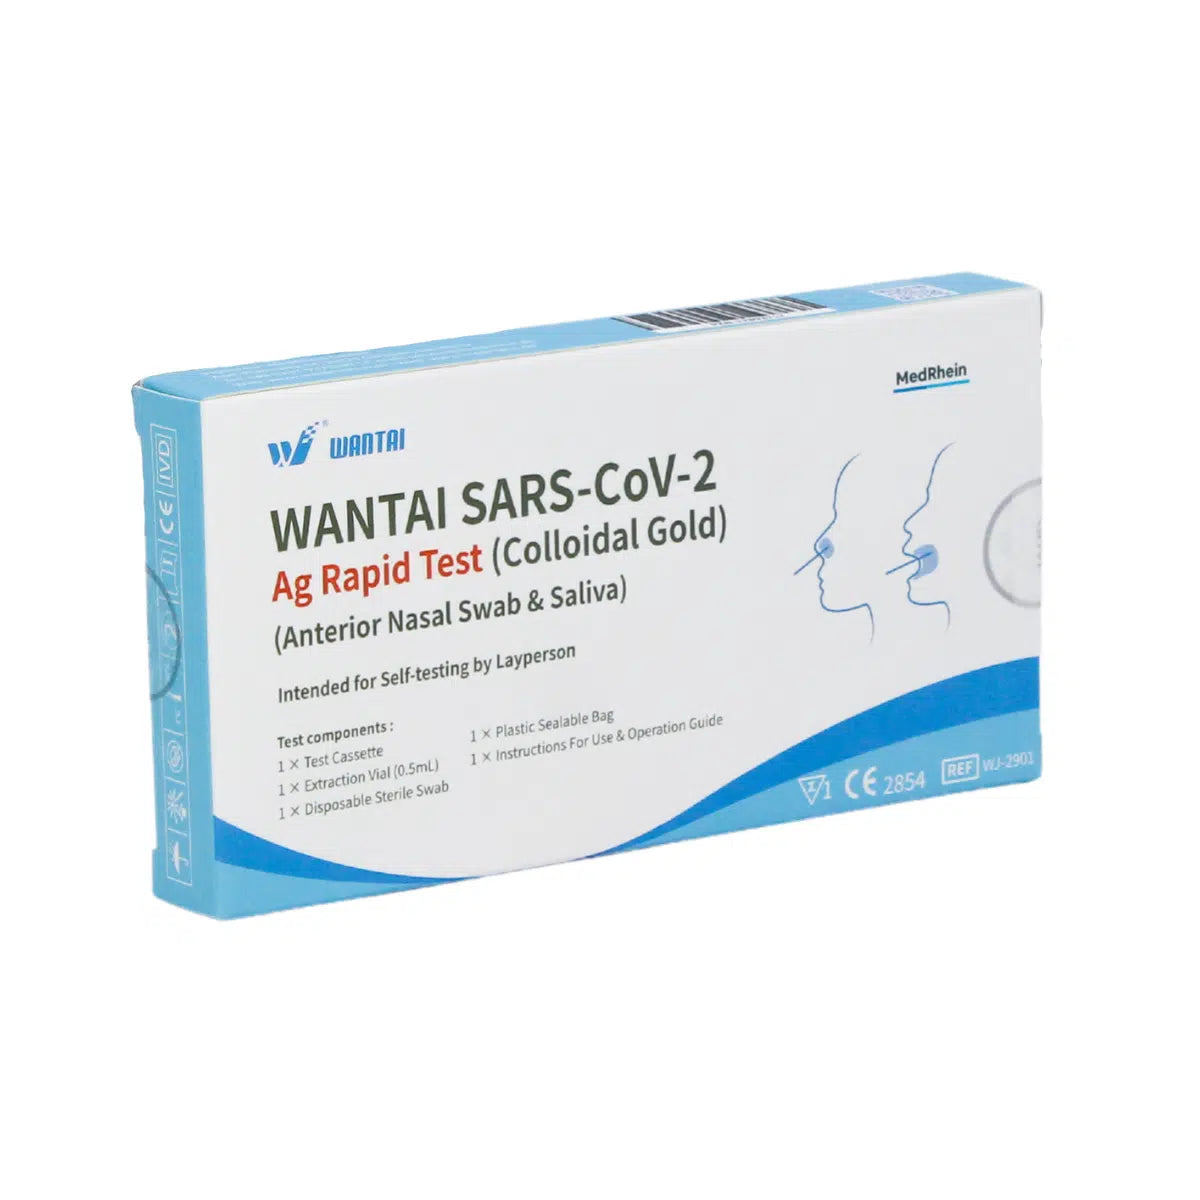 Wantai SARS-Cov-2 rapid test, lollipop test (collodial gold) CE/2854